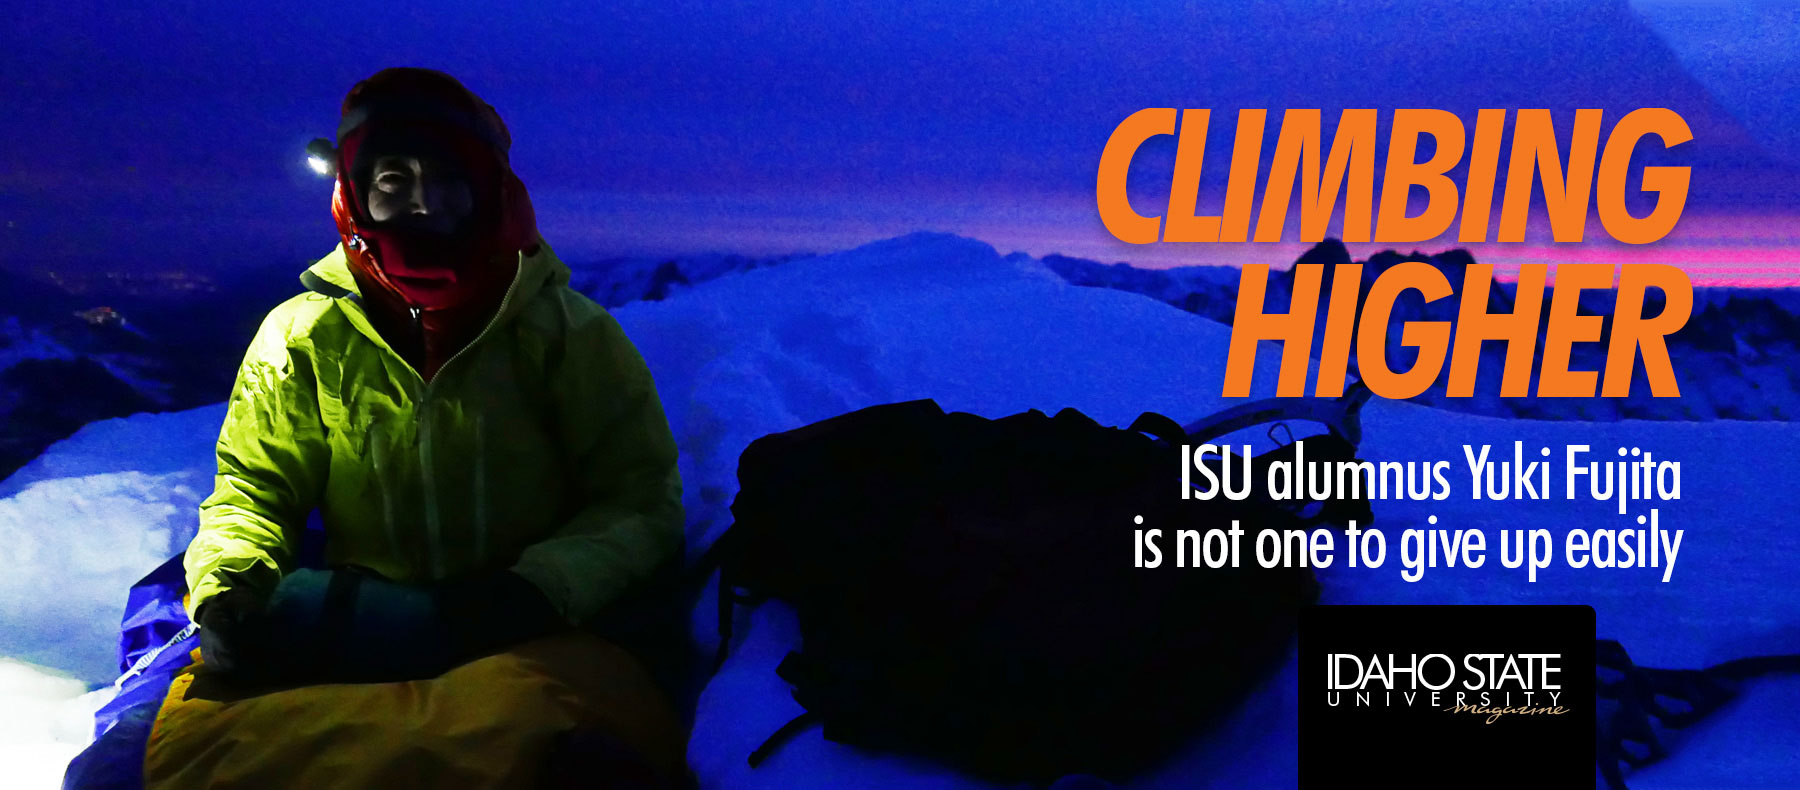 Climbing higher. ISU alumnus Yuki Fujita is not one to give up easily.